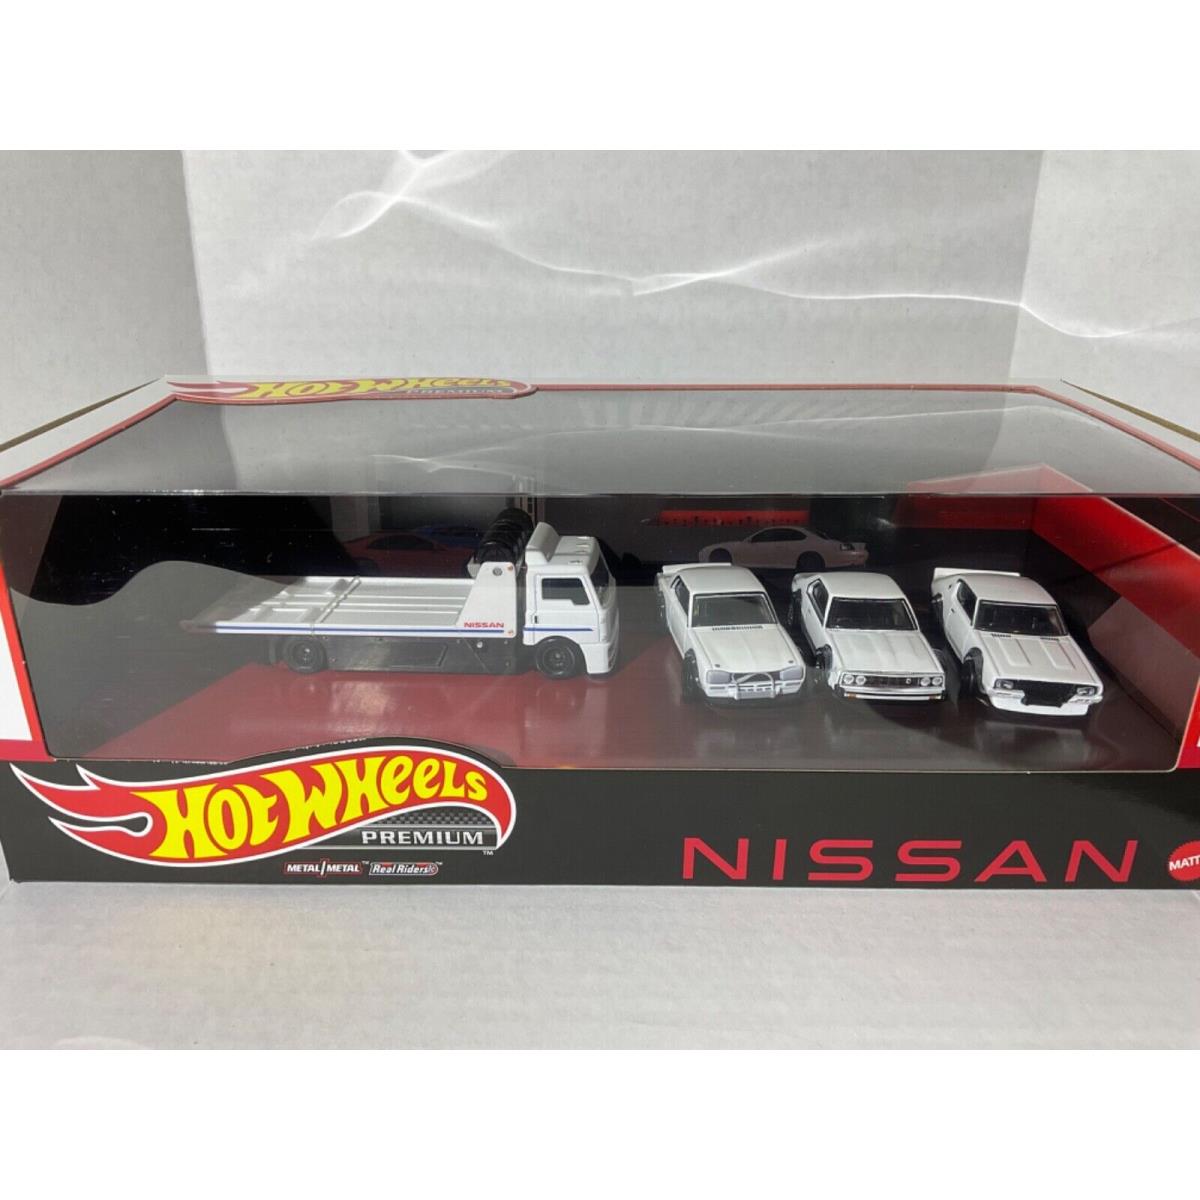 Hot Wheels 1:64 Nissan Skyline Gt-r Lbwk/ C210/ HT 2000 Gt-x Garage Set Diorama